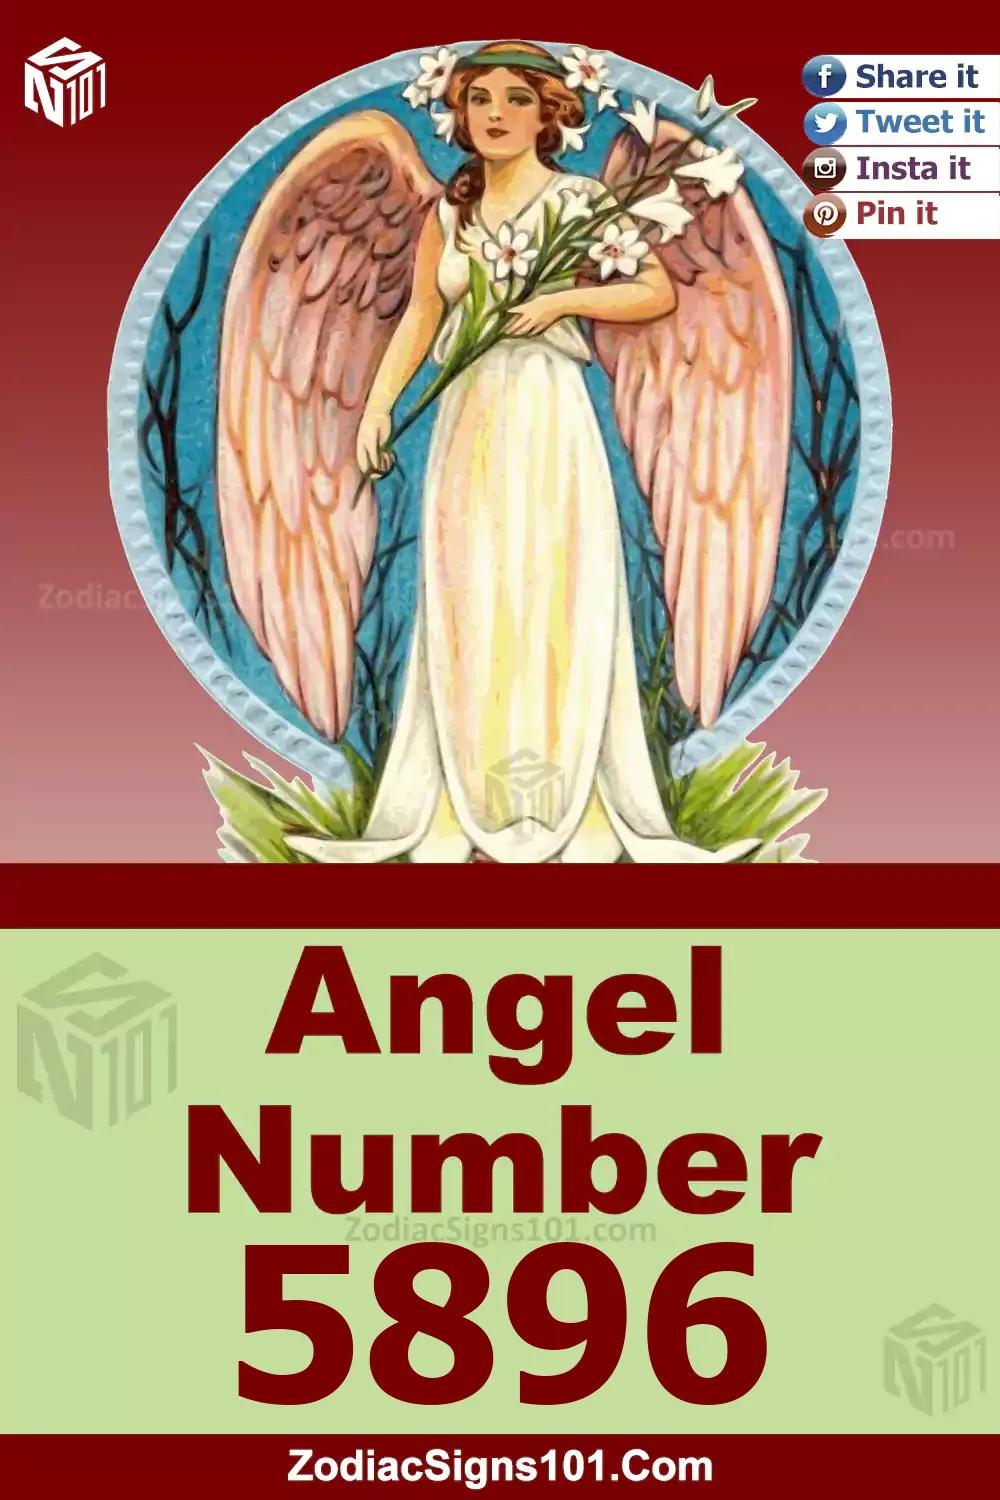 5896-Angel-Number-Meaning.jpg